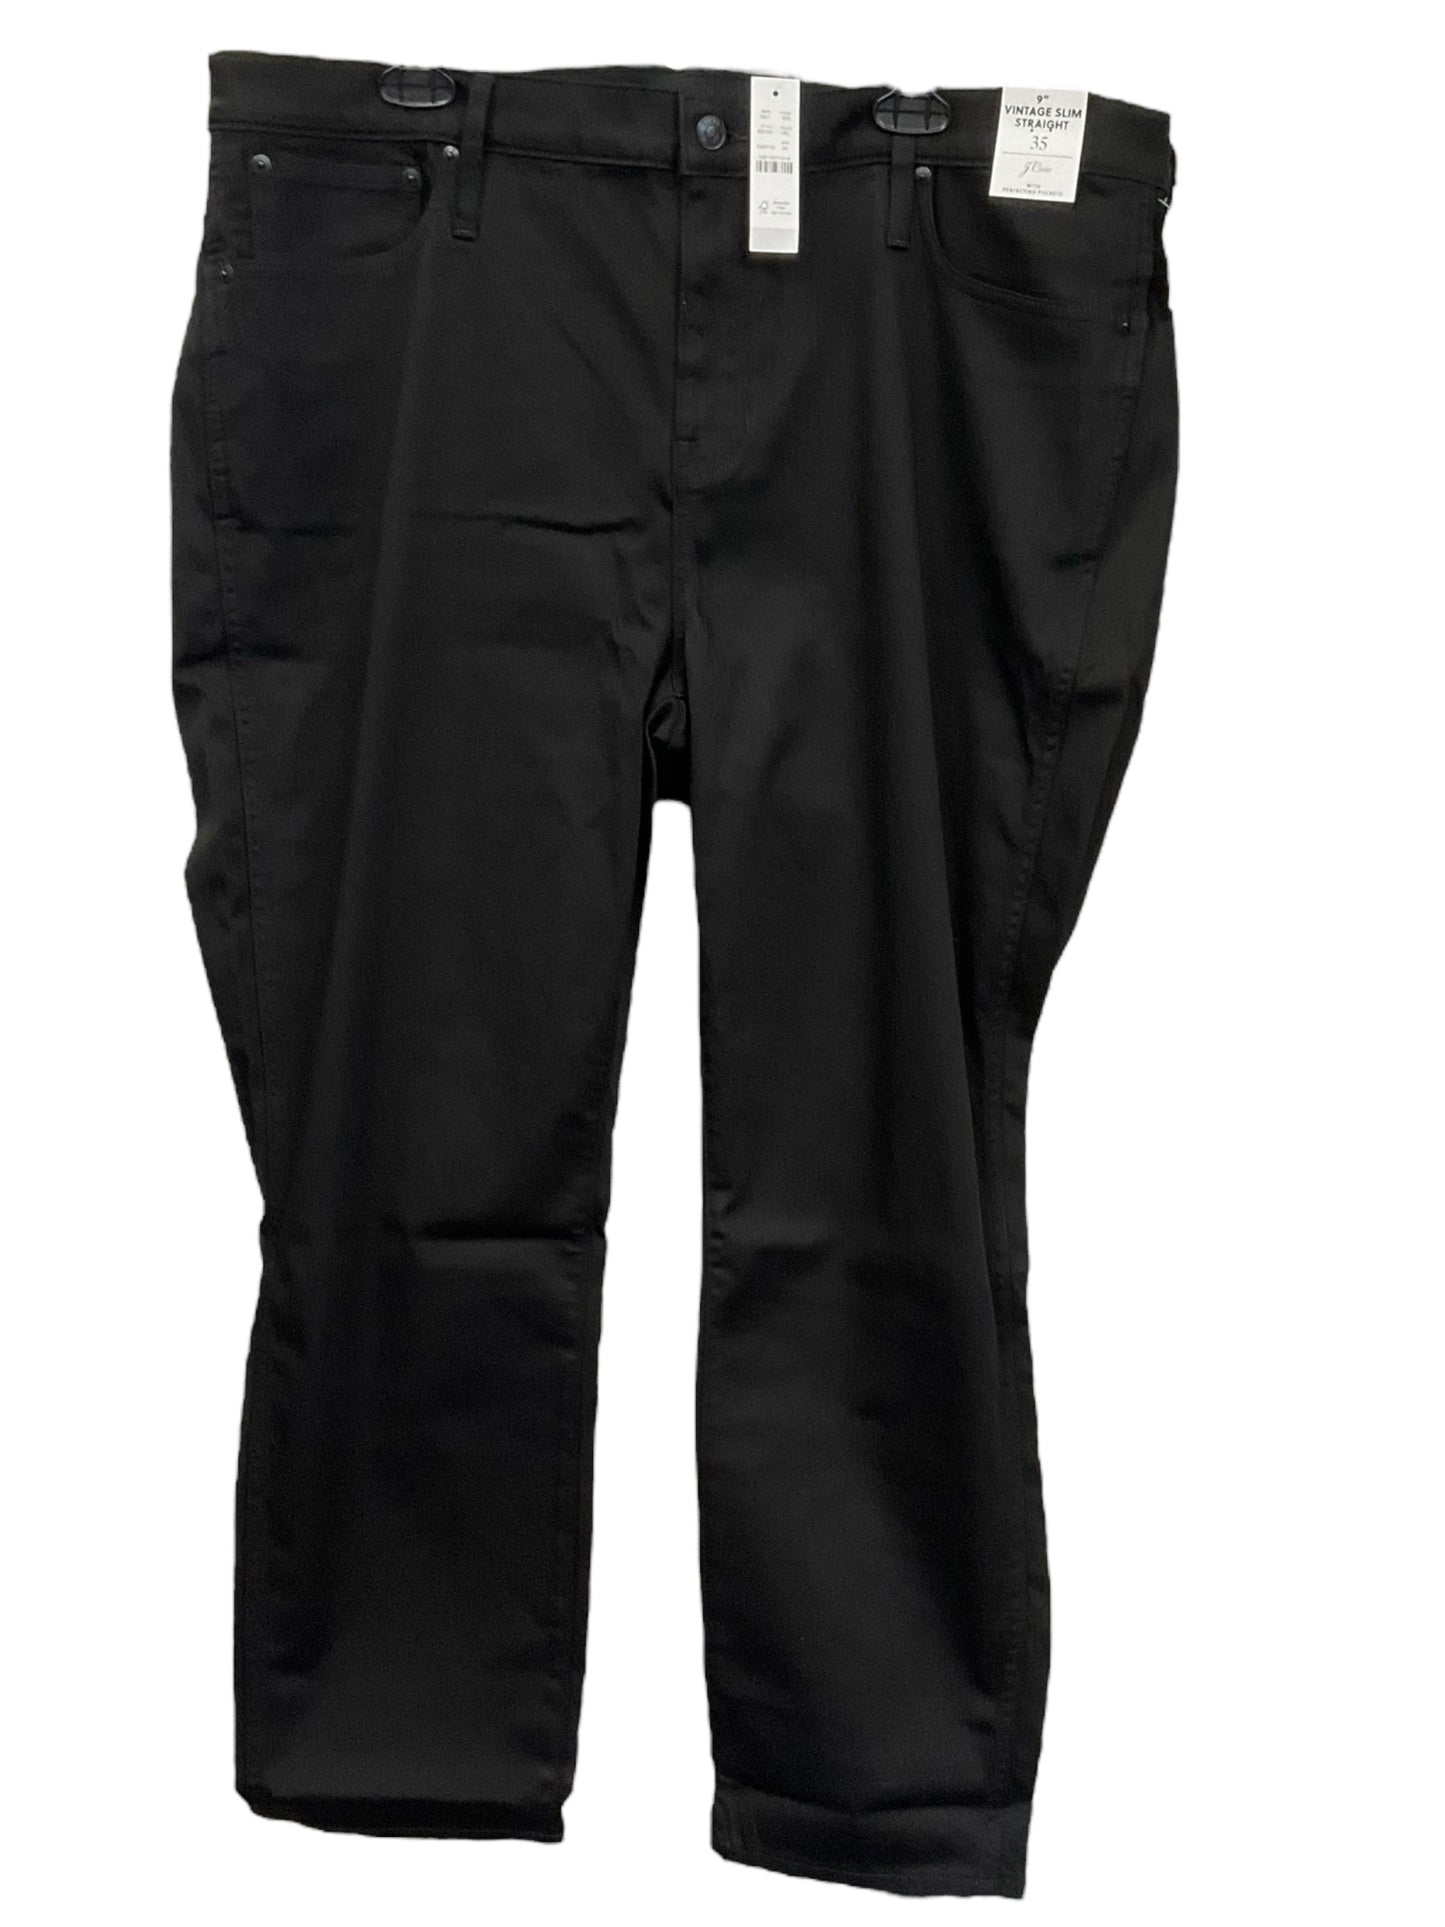 Black Pants Other Gap, Size 20